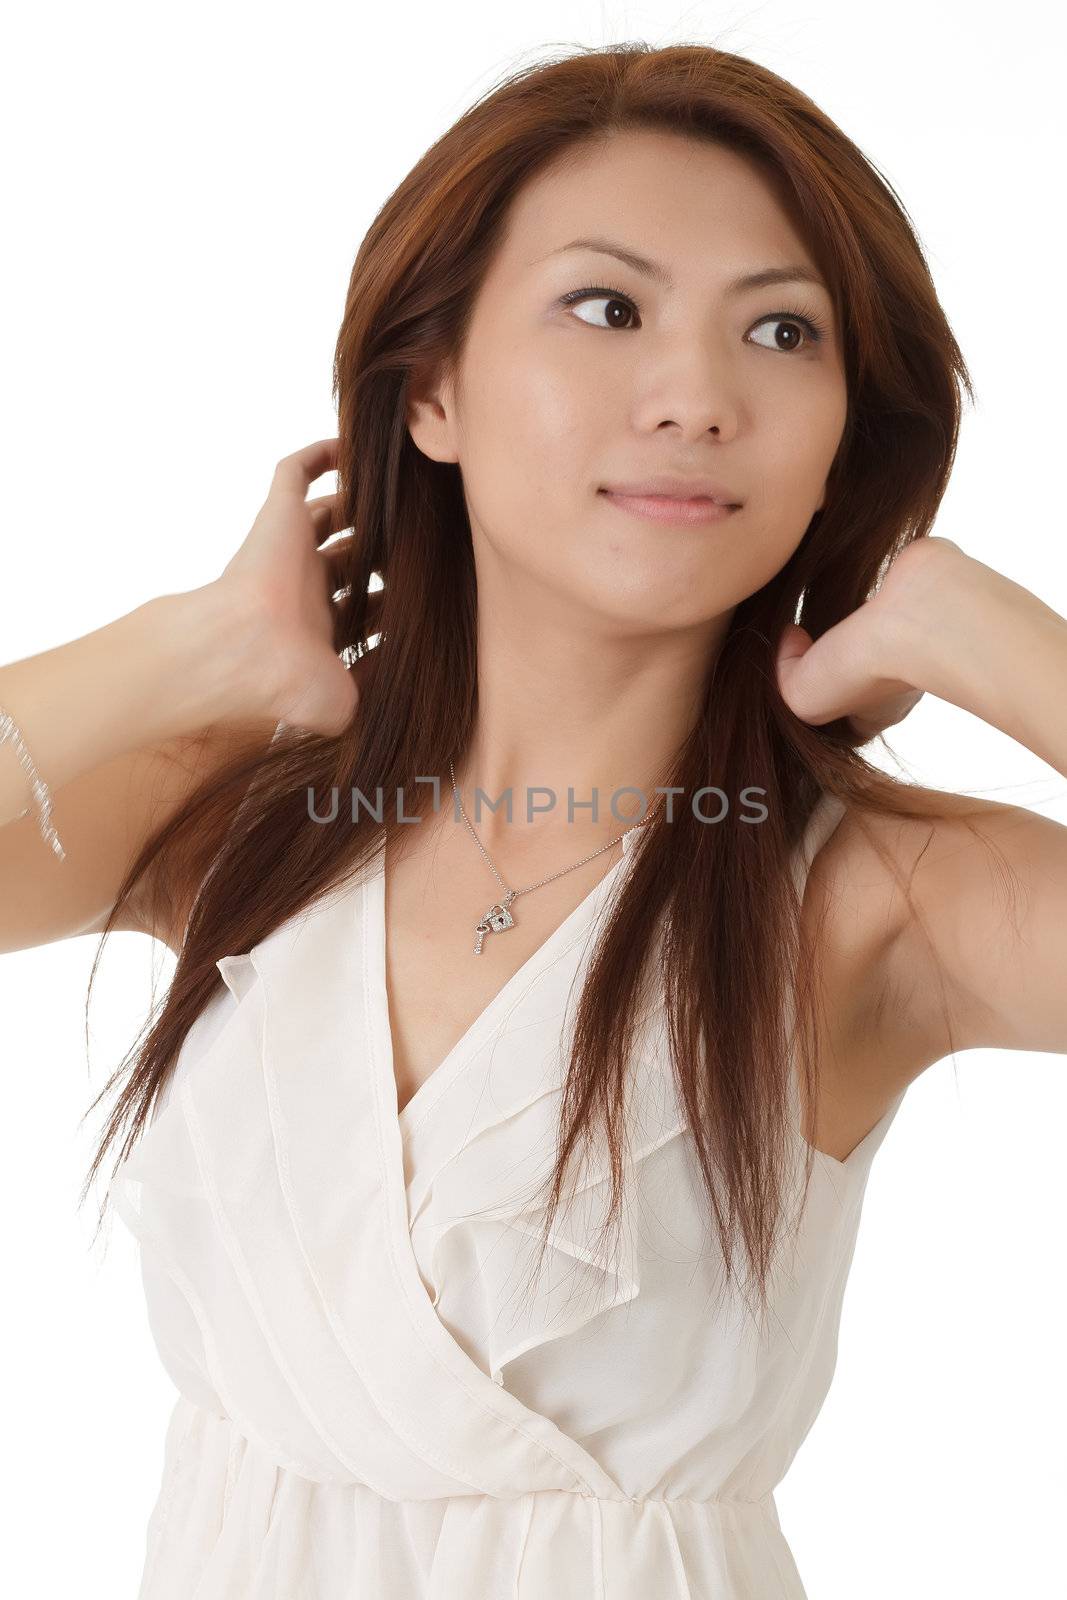 Elegant Asian beauty, closeup portrait over white background.